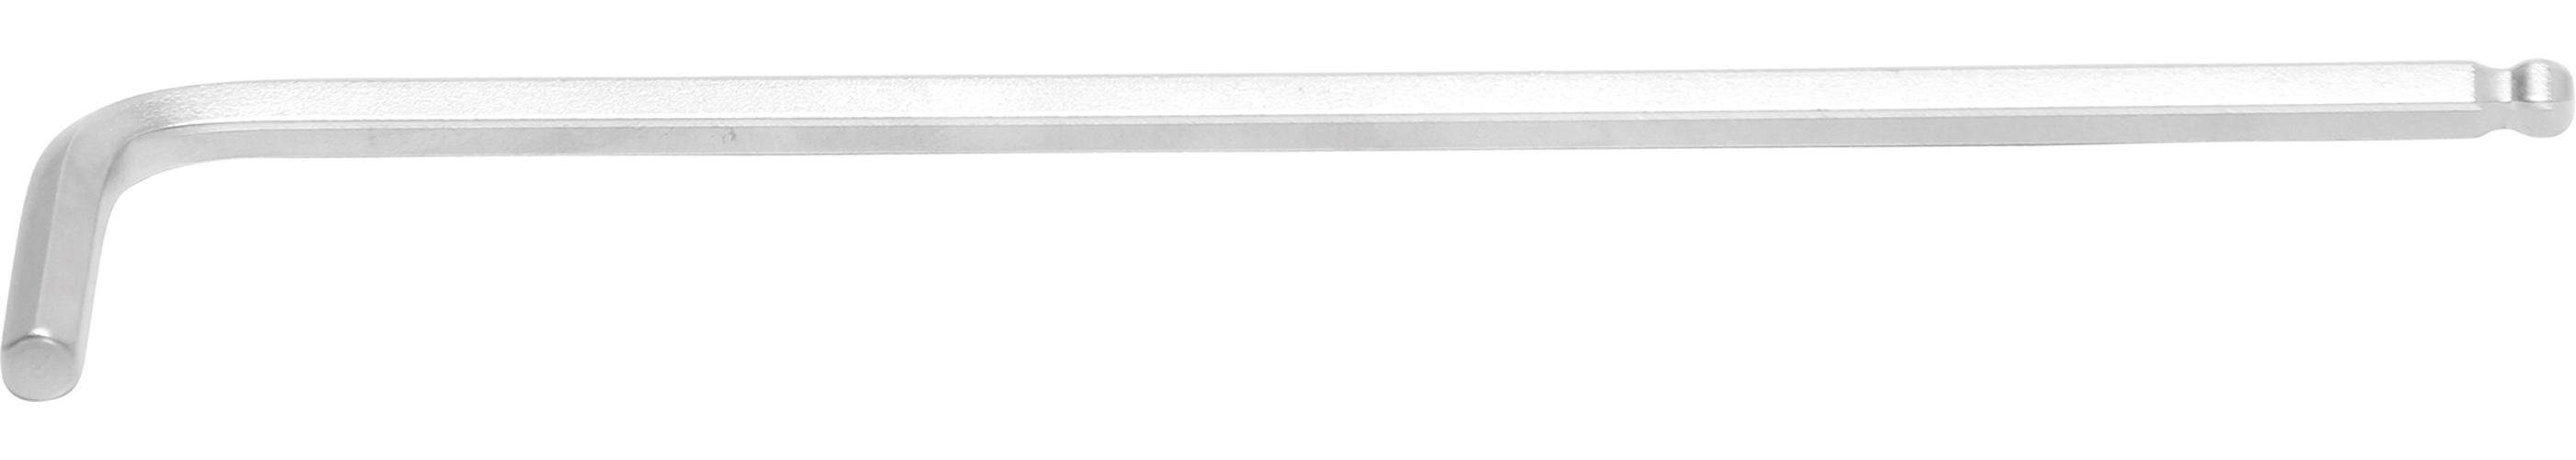 BGS technic Bit-Schraubendreher Winkelschlüssel, extra lang, Innensechskant / Innensechskant mit Kugelkopf 5 mm | Schraubendreher